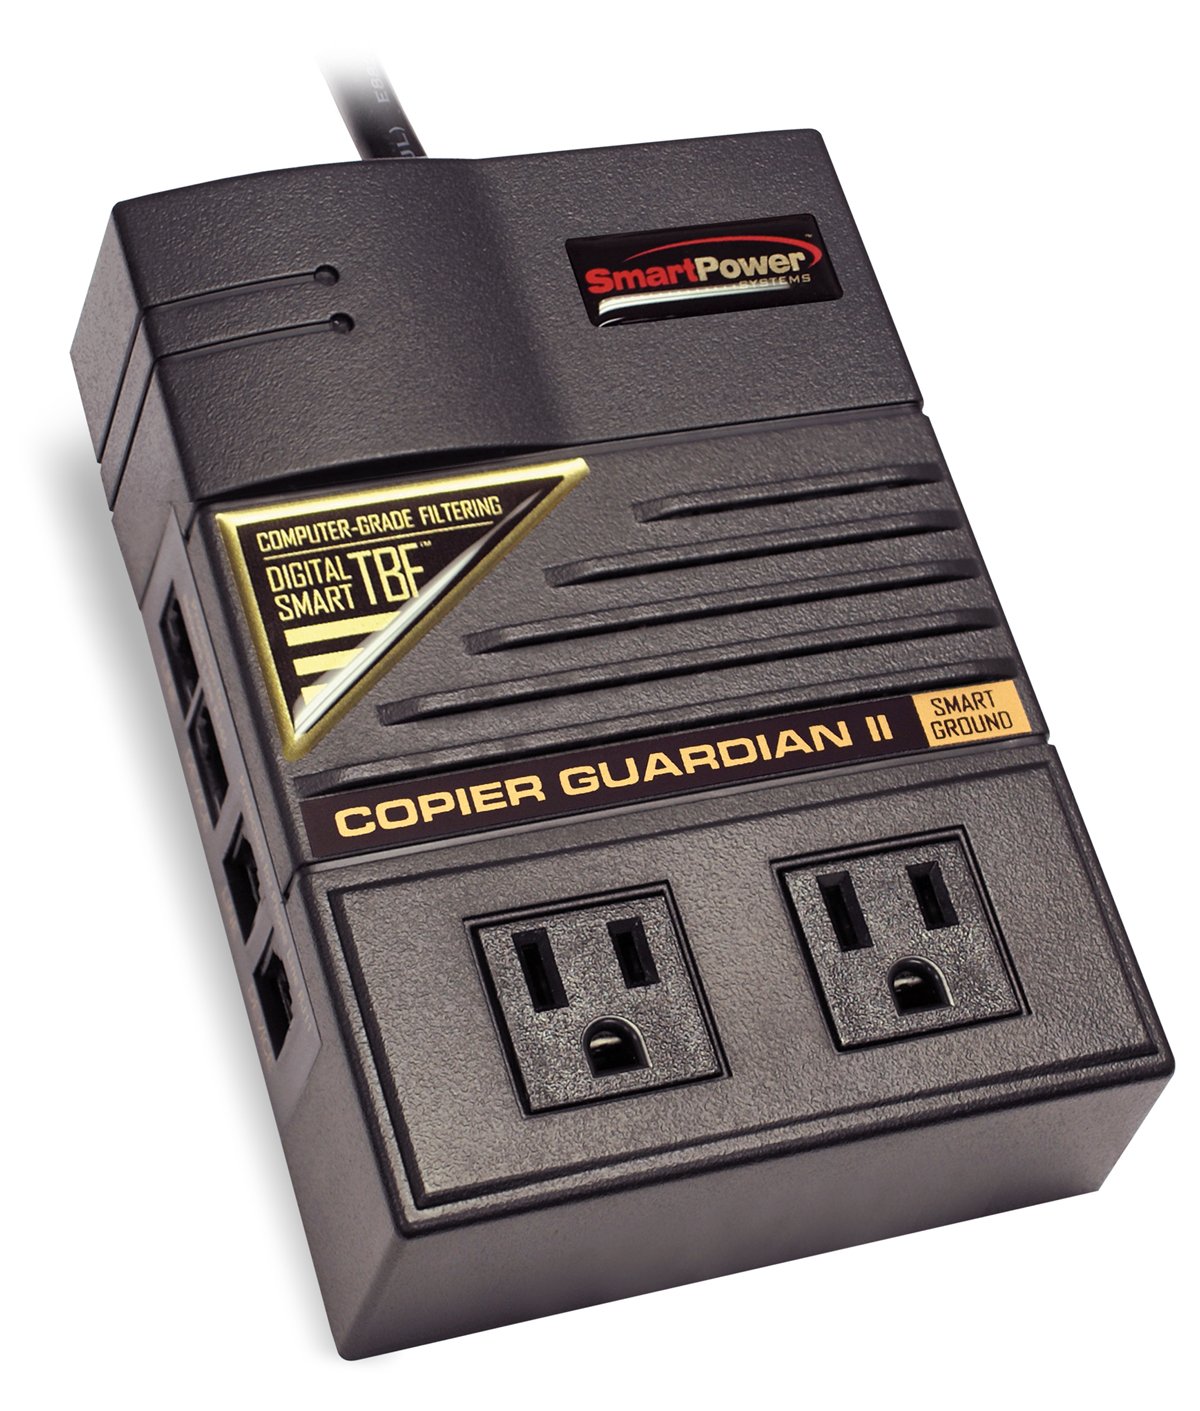 Copier Guardian II - Electronic Power Conditioner